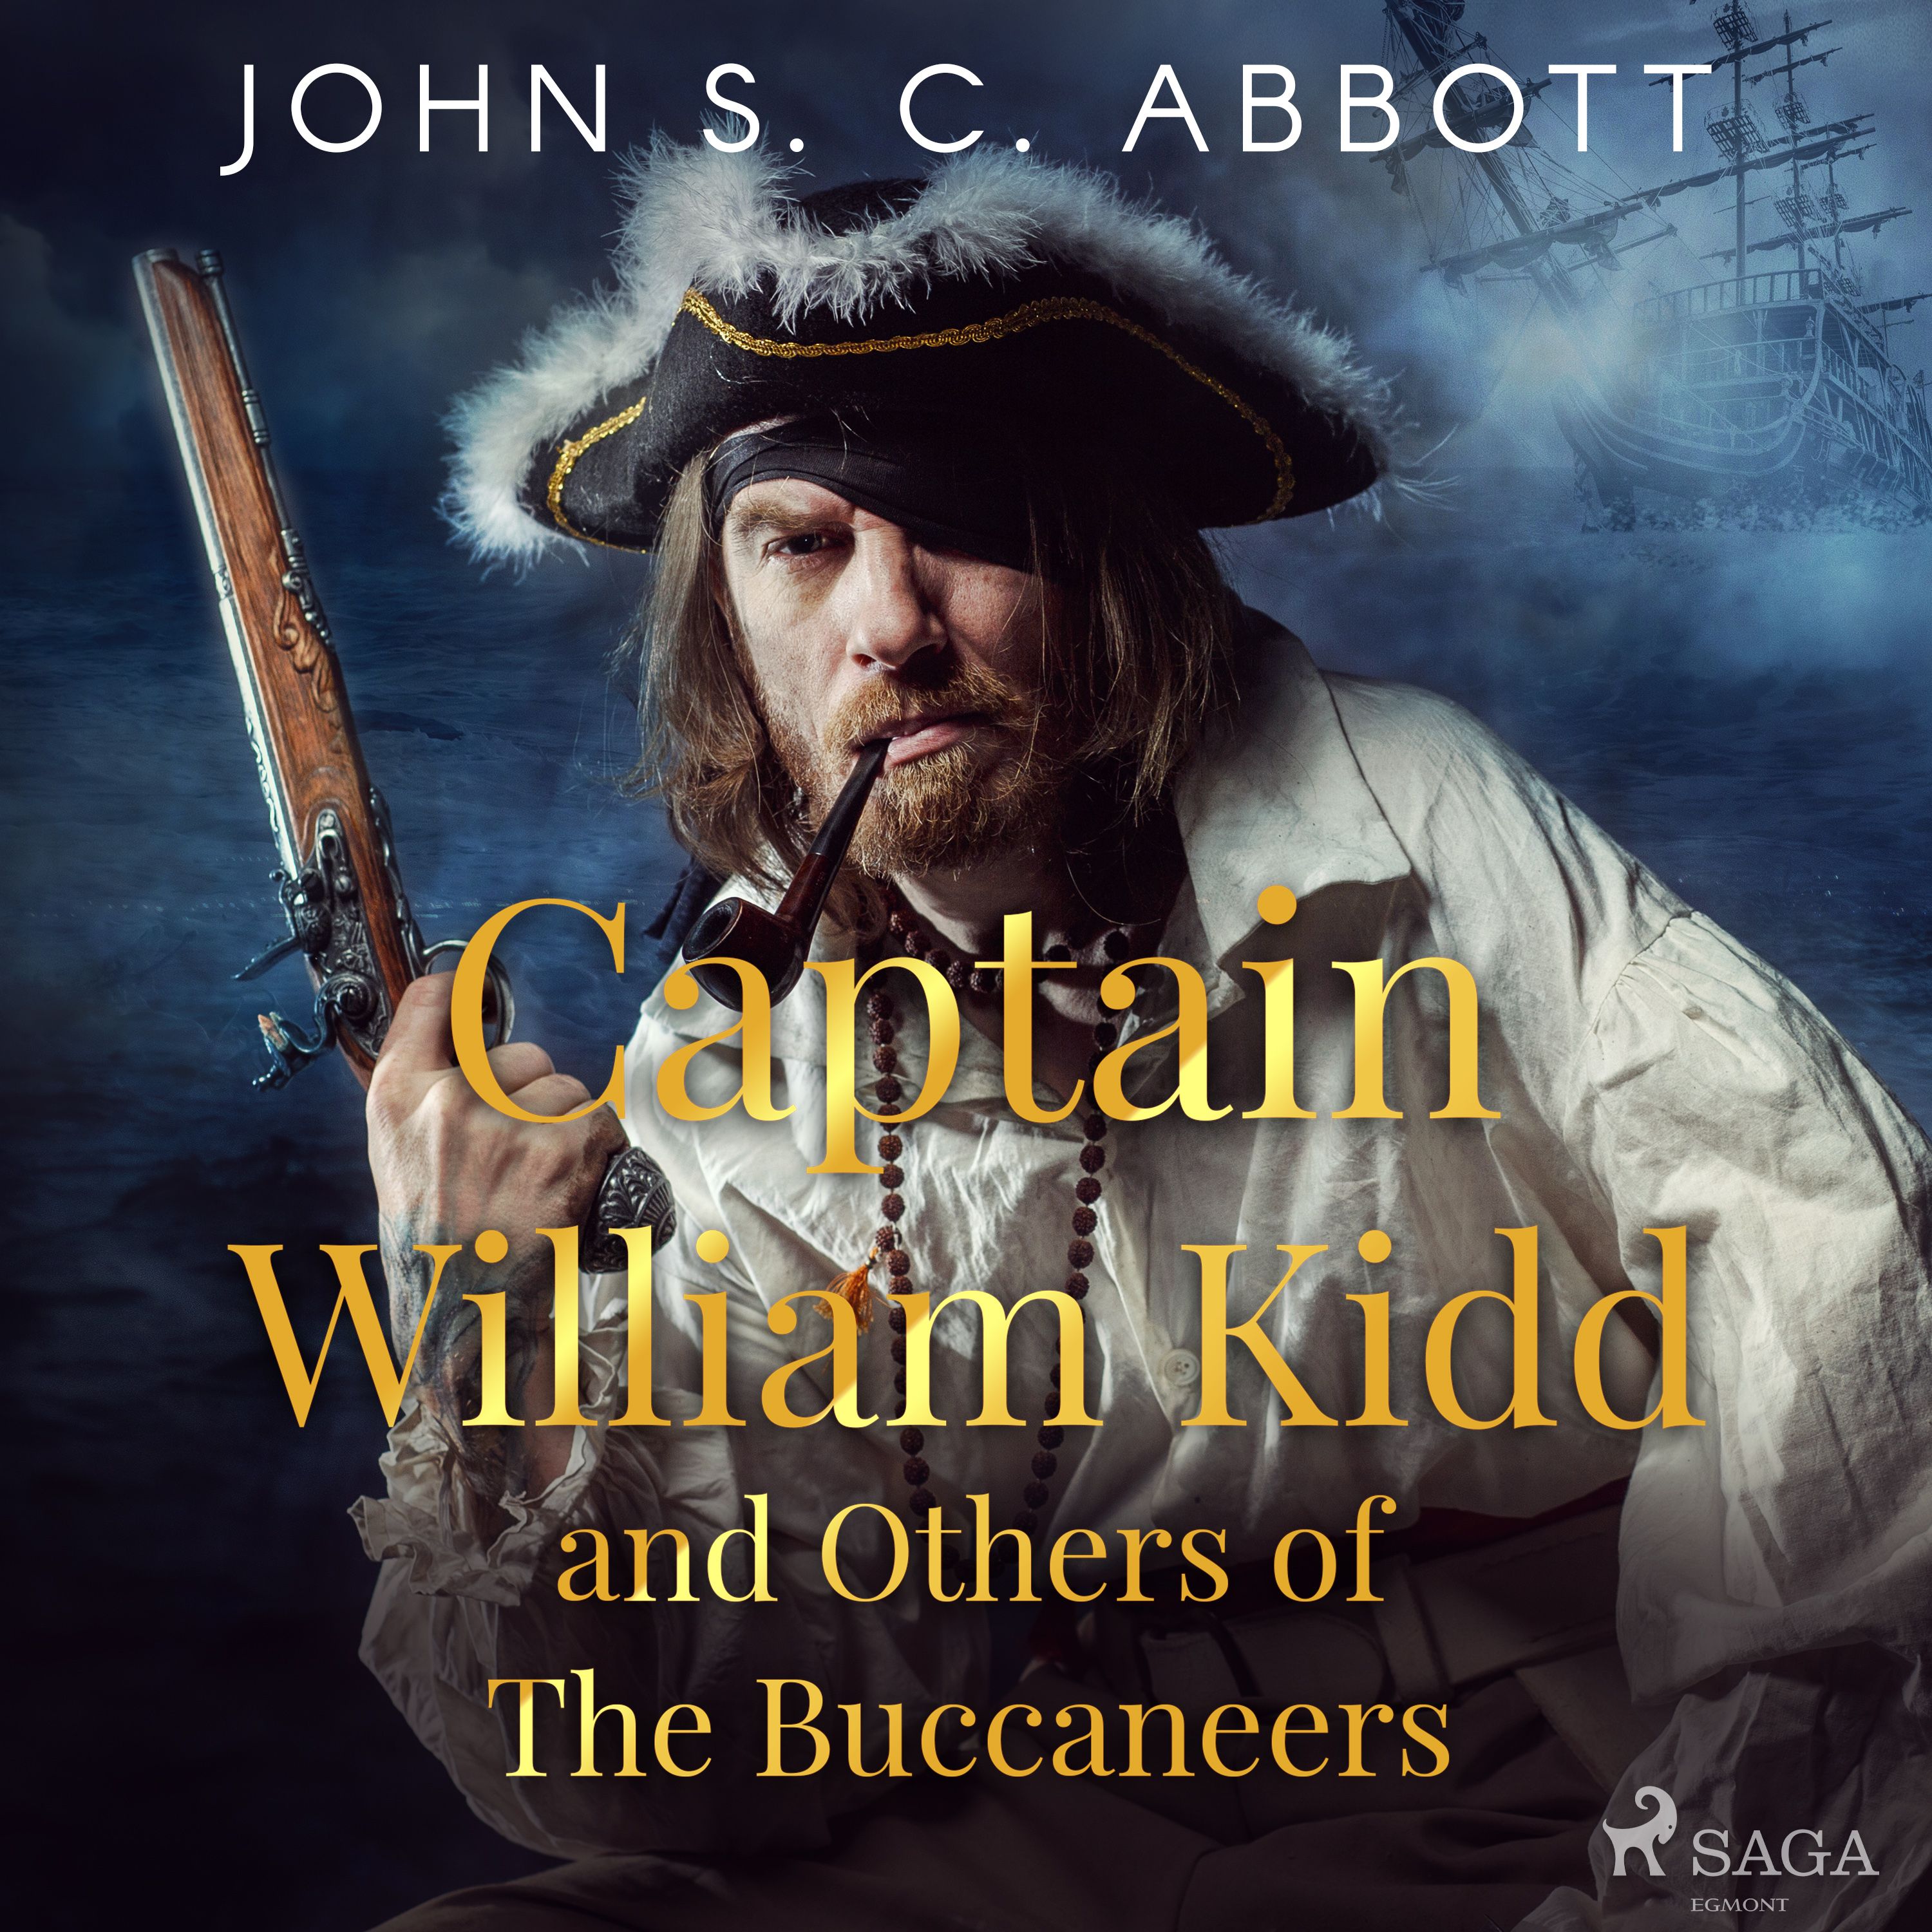 Captain William Kidd and Others of The Buccaneers, ljudbok av John S. C. Abbott